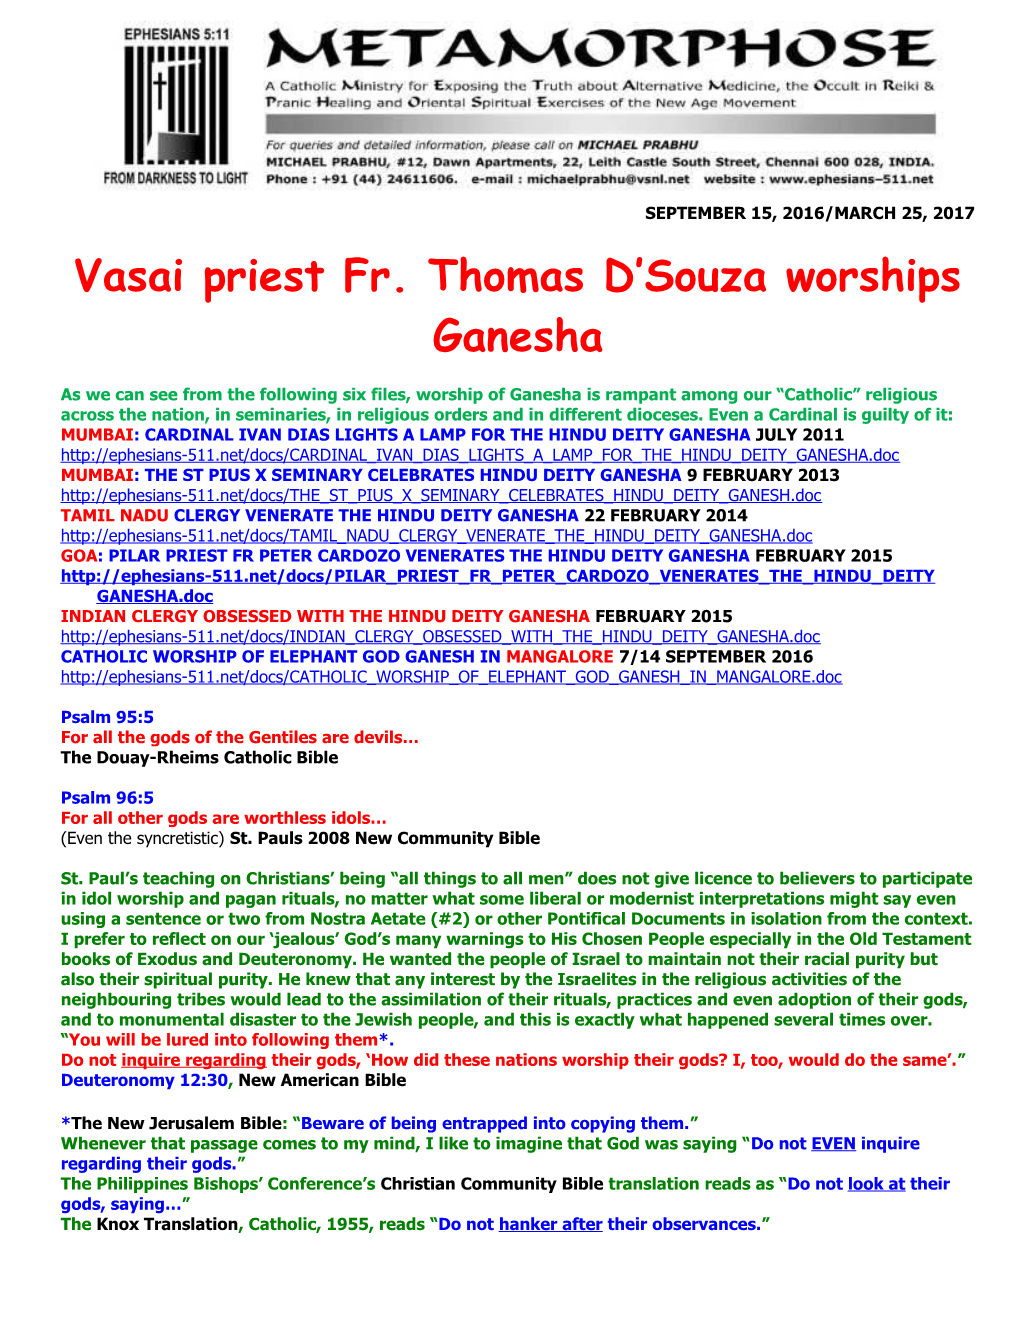 Vasai Priest Fr. Thomas D Souza Worships Ganesha